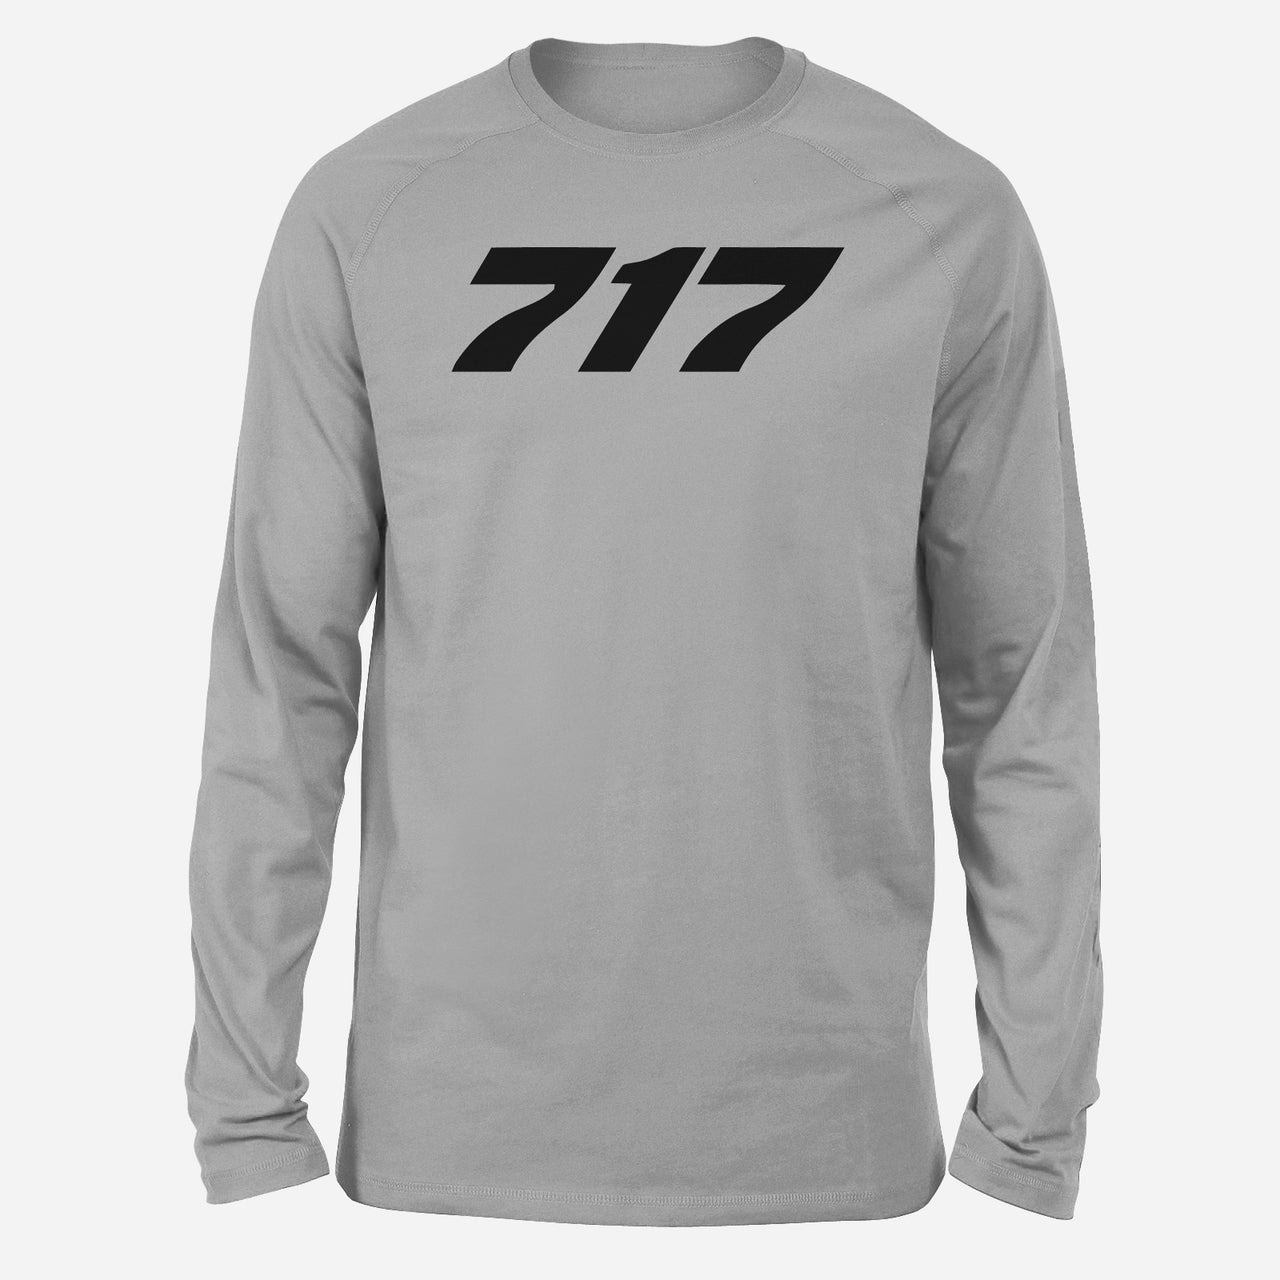 717 Flat Text Designed Long-Sleeve T-Shirts